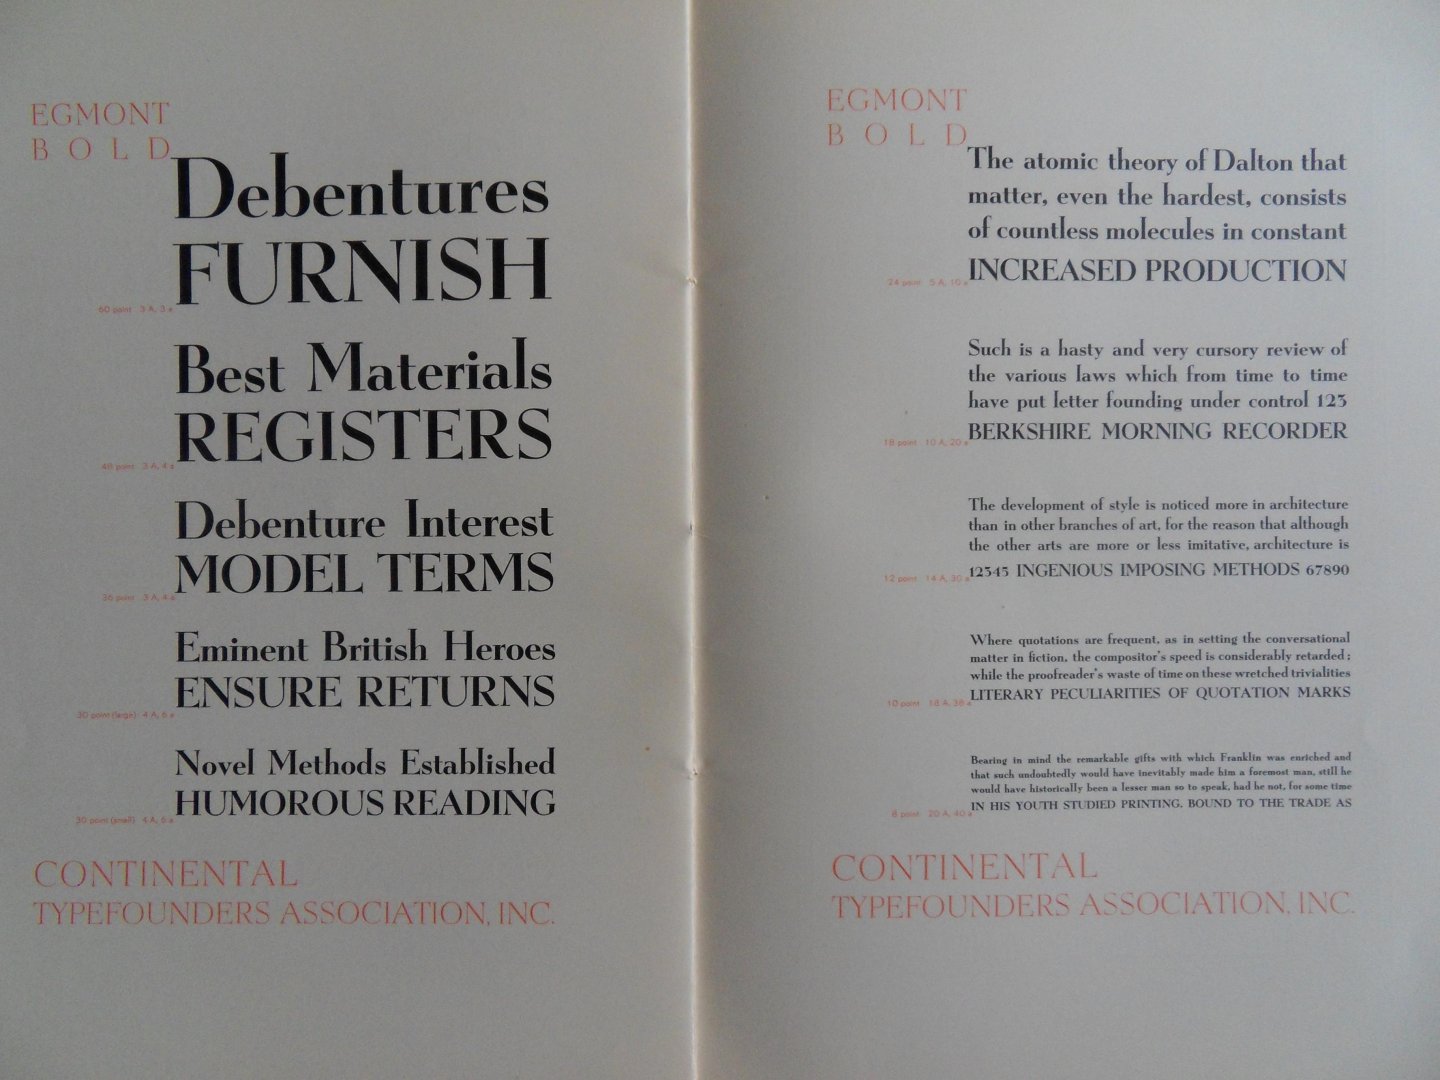 Roos, S.H. de [ ontwerper ]. - Egmont. - A Distinguished Design for Fine Books and Quality Advertising. [ Letterproef - Type specimen ]. [ Met drie bijlagen ].